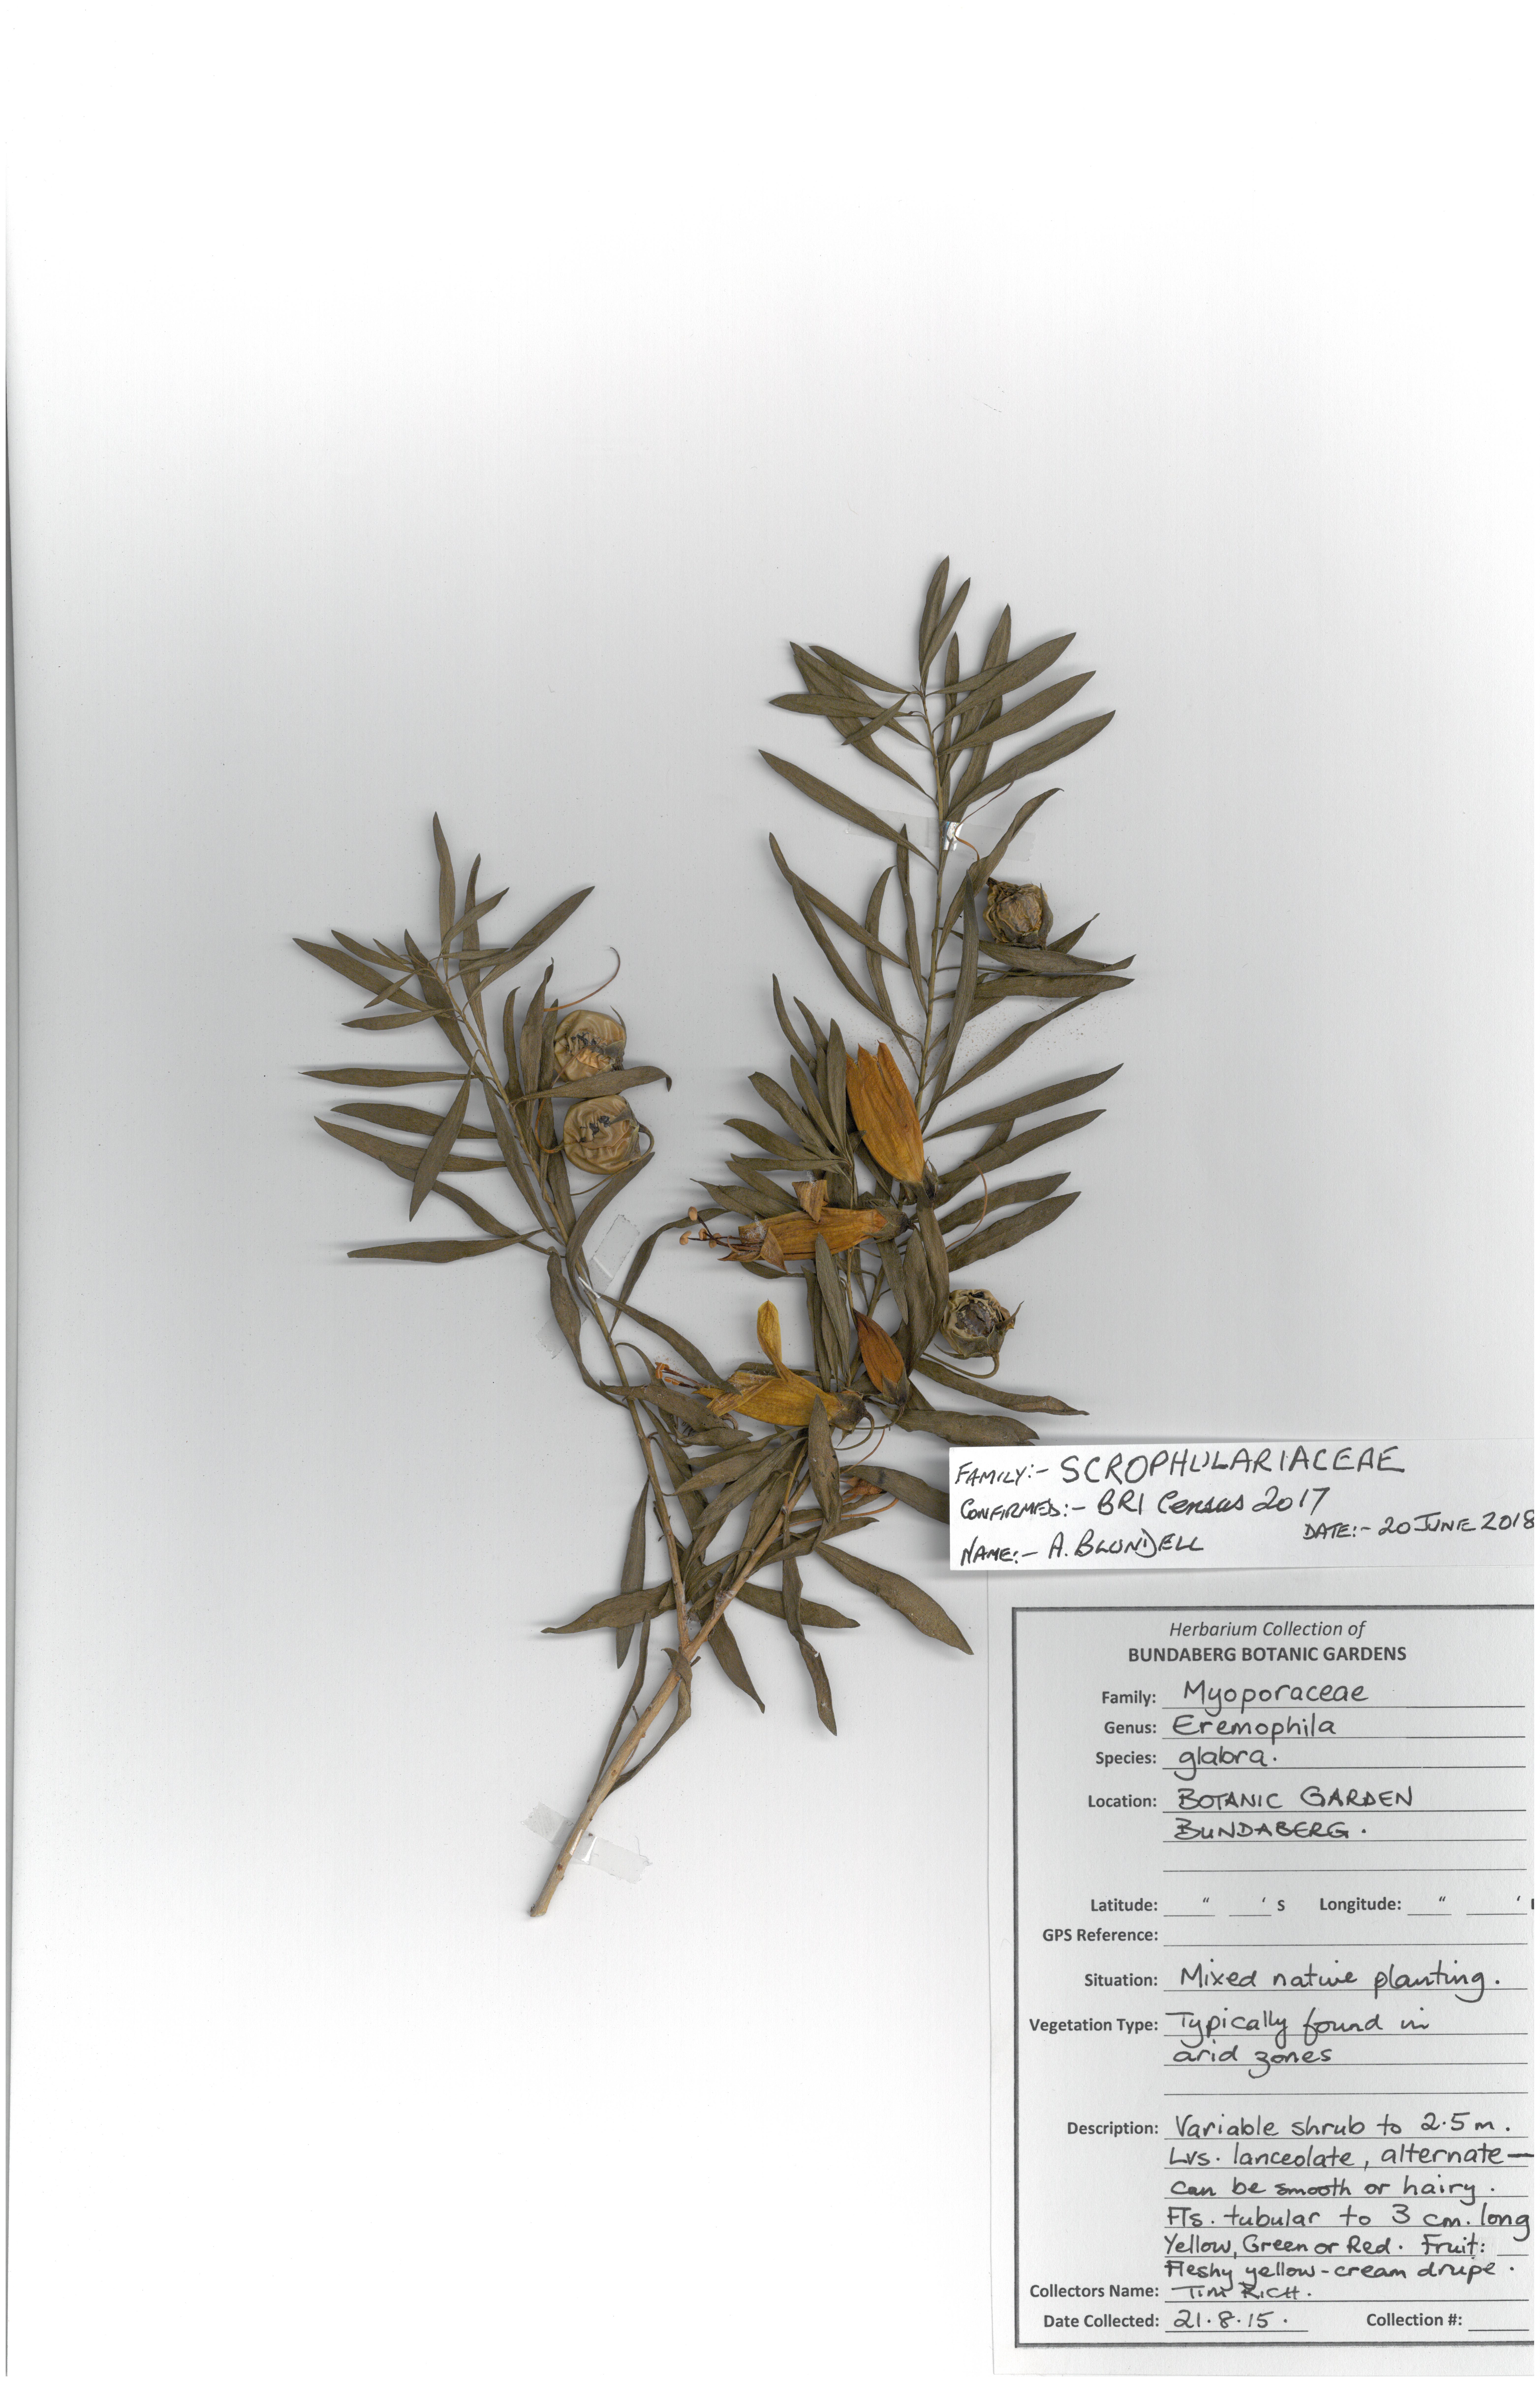 Scrophulariaceae eremophila glabra